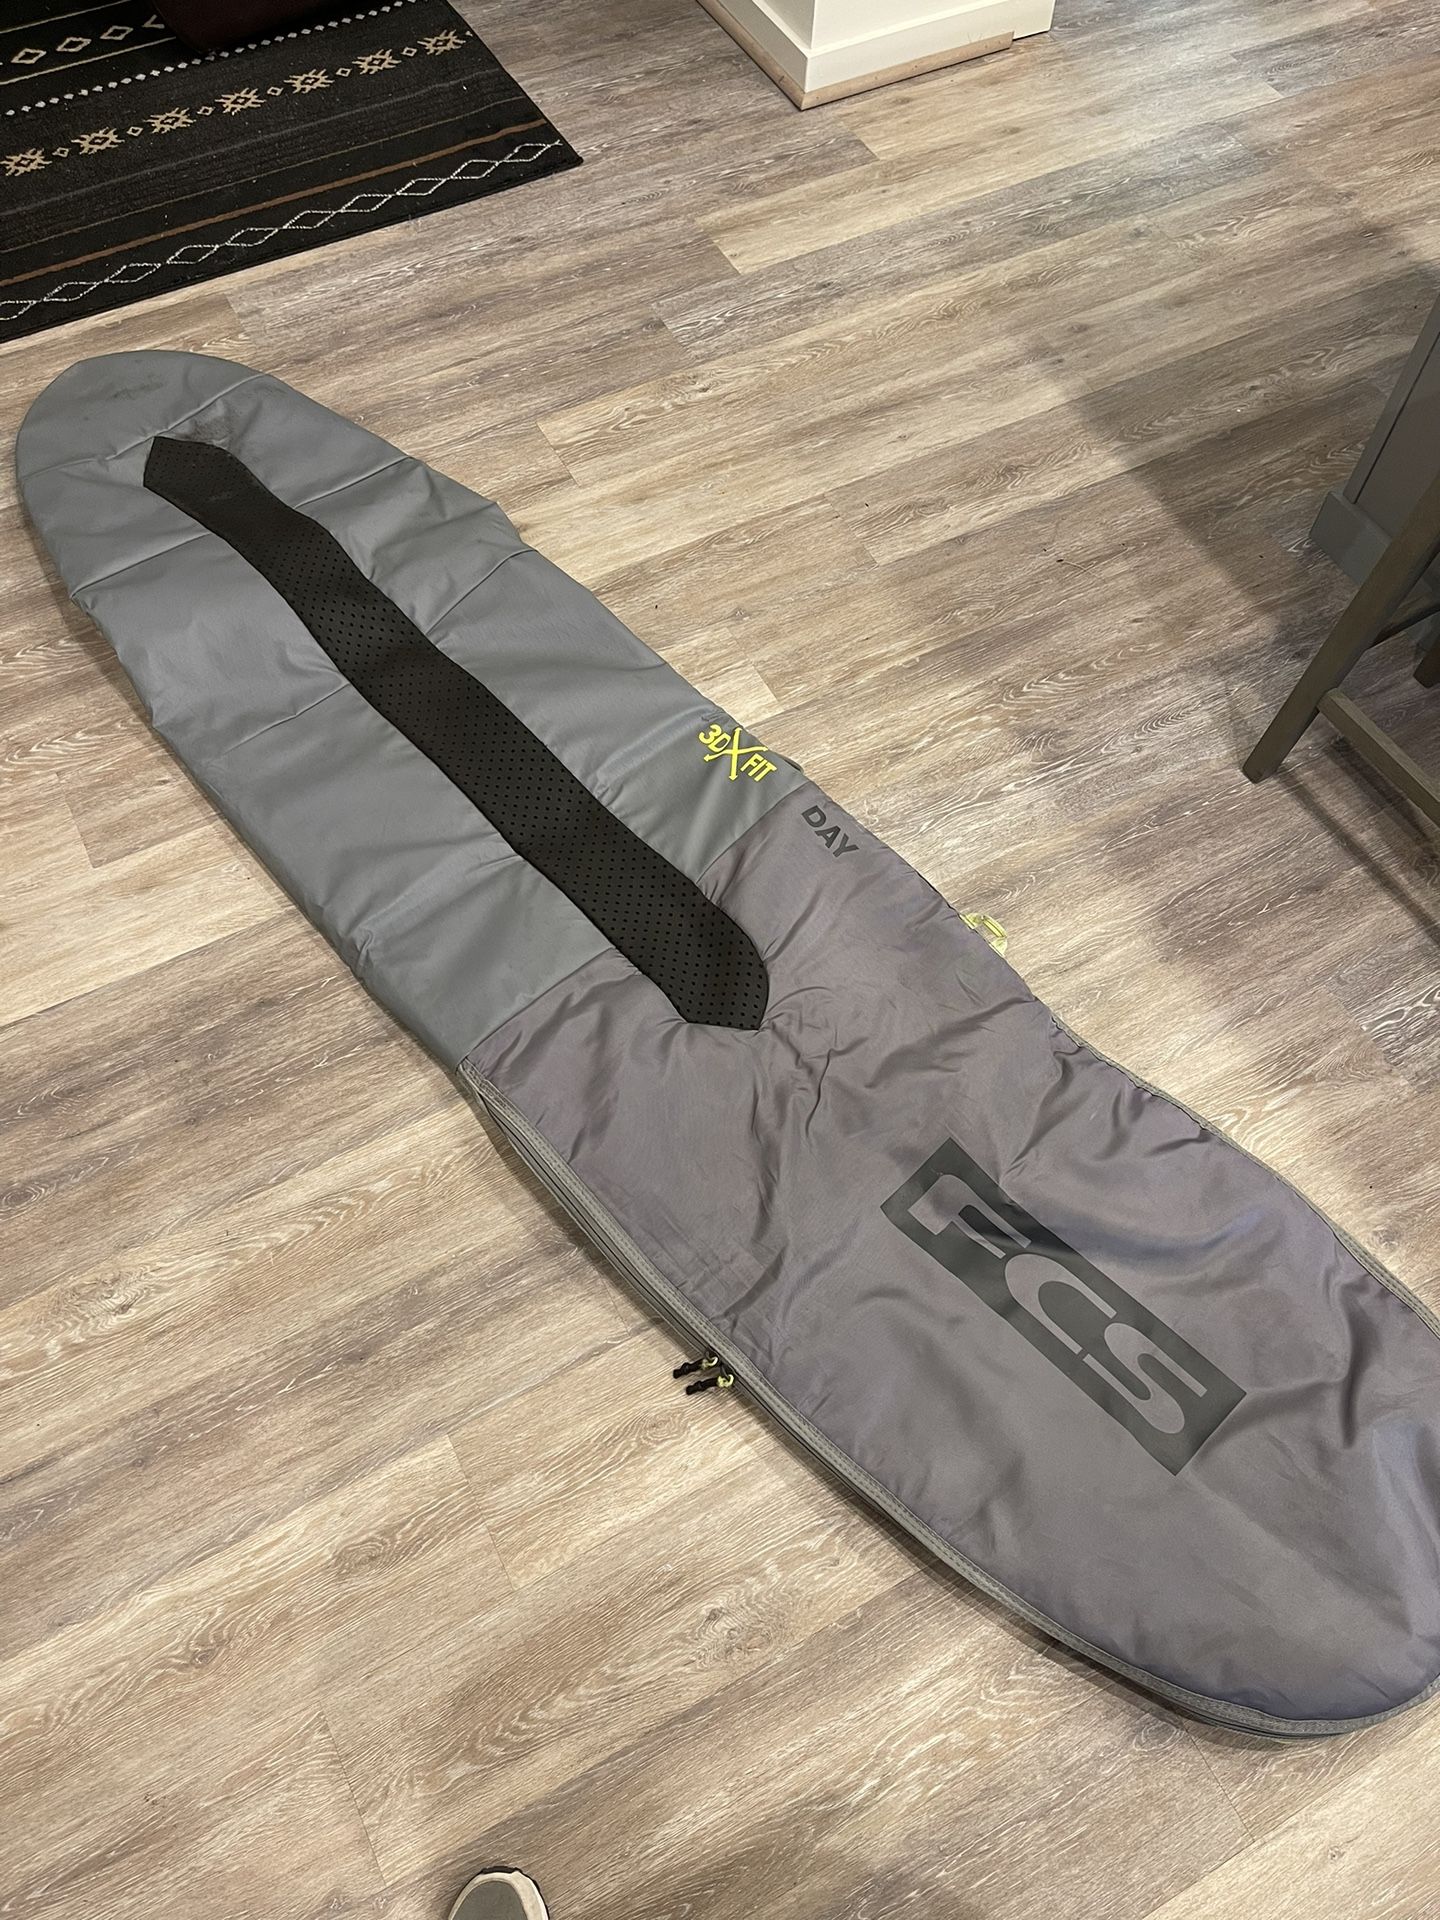 FCS Surfboard Bag 